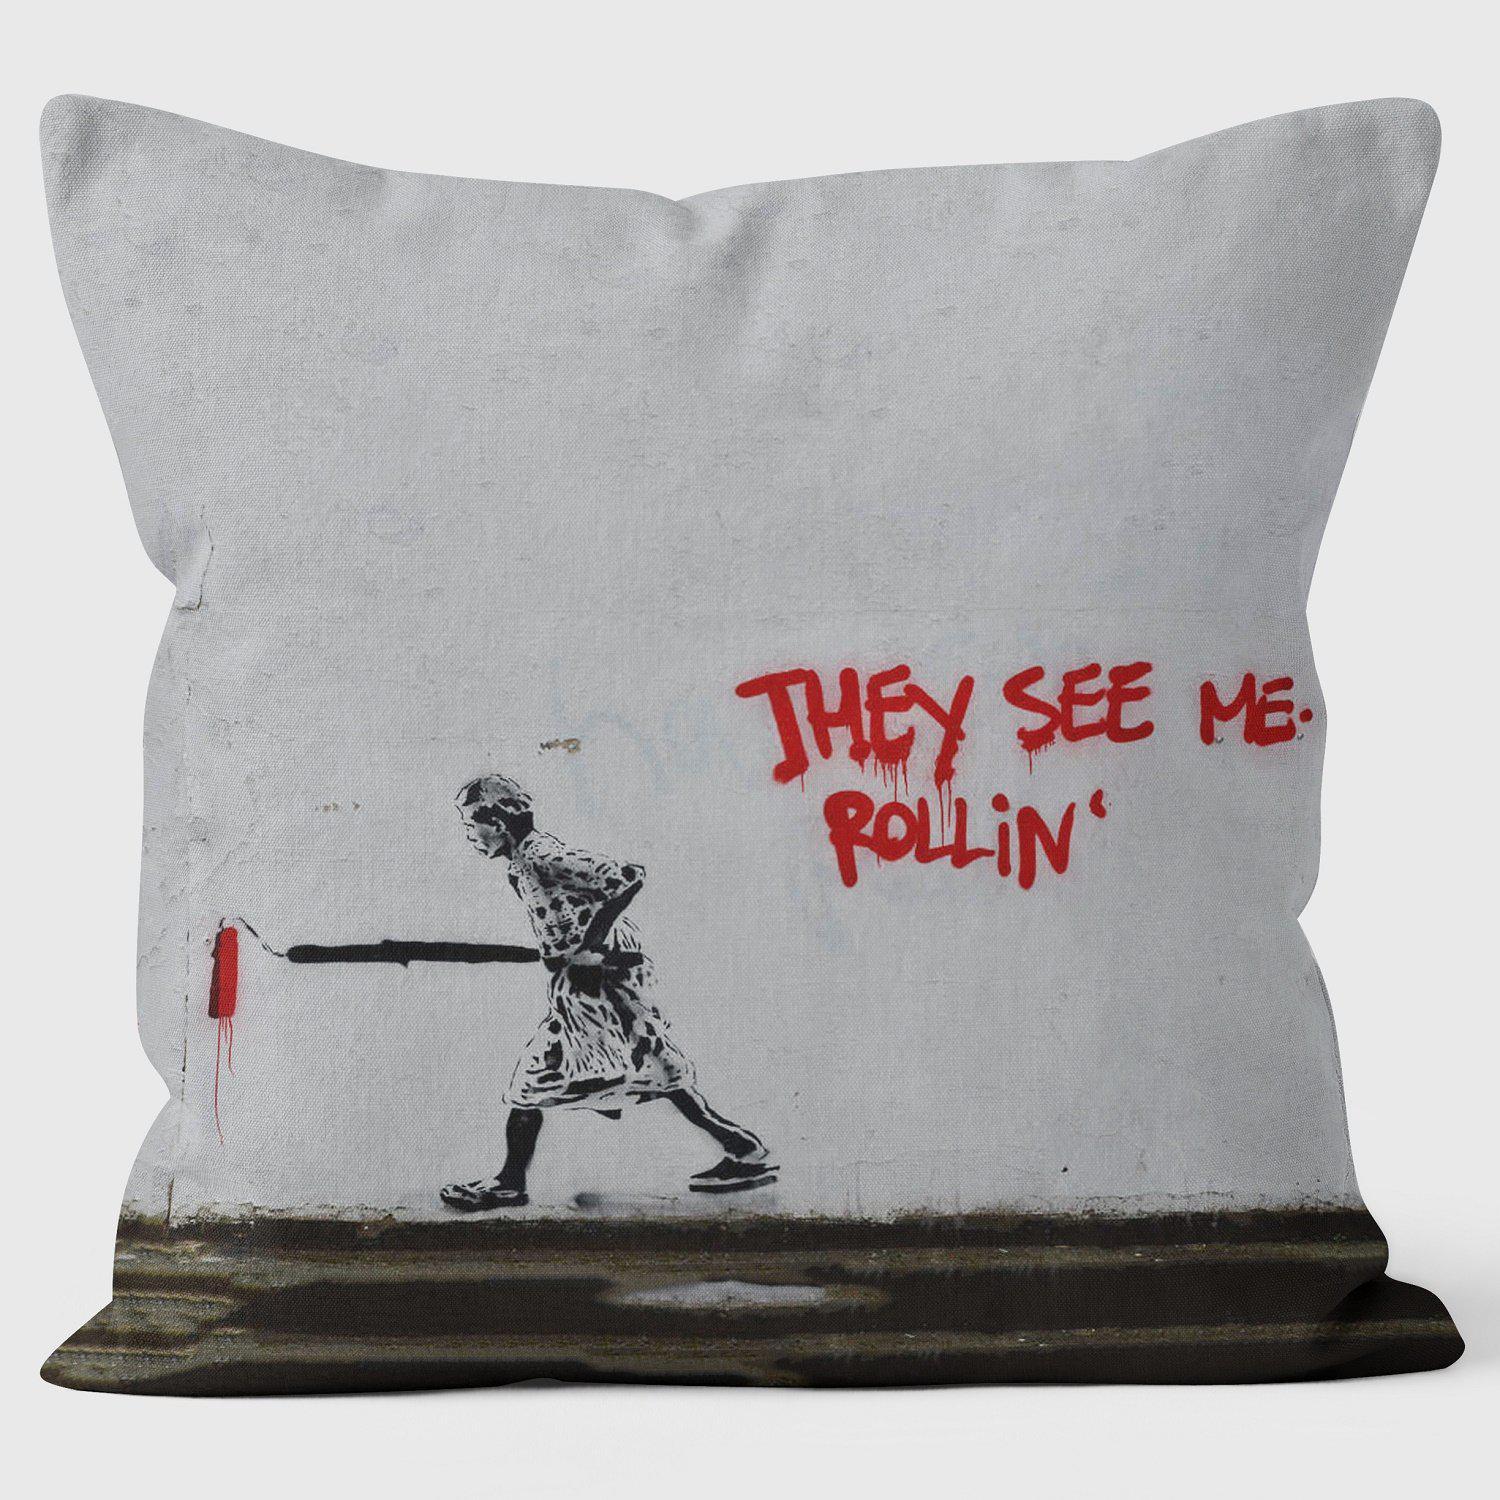 Rolling - Banksy Inspired - Graffiti Art Cushion - Handmade Cushions UK - WeLoveCushions